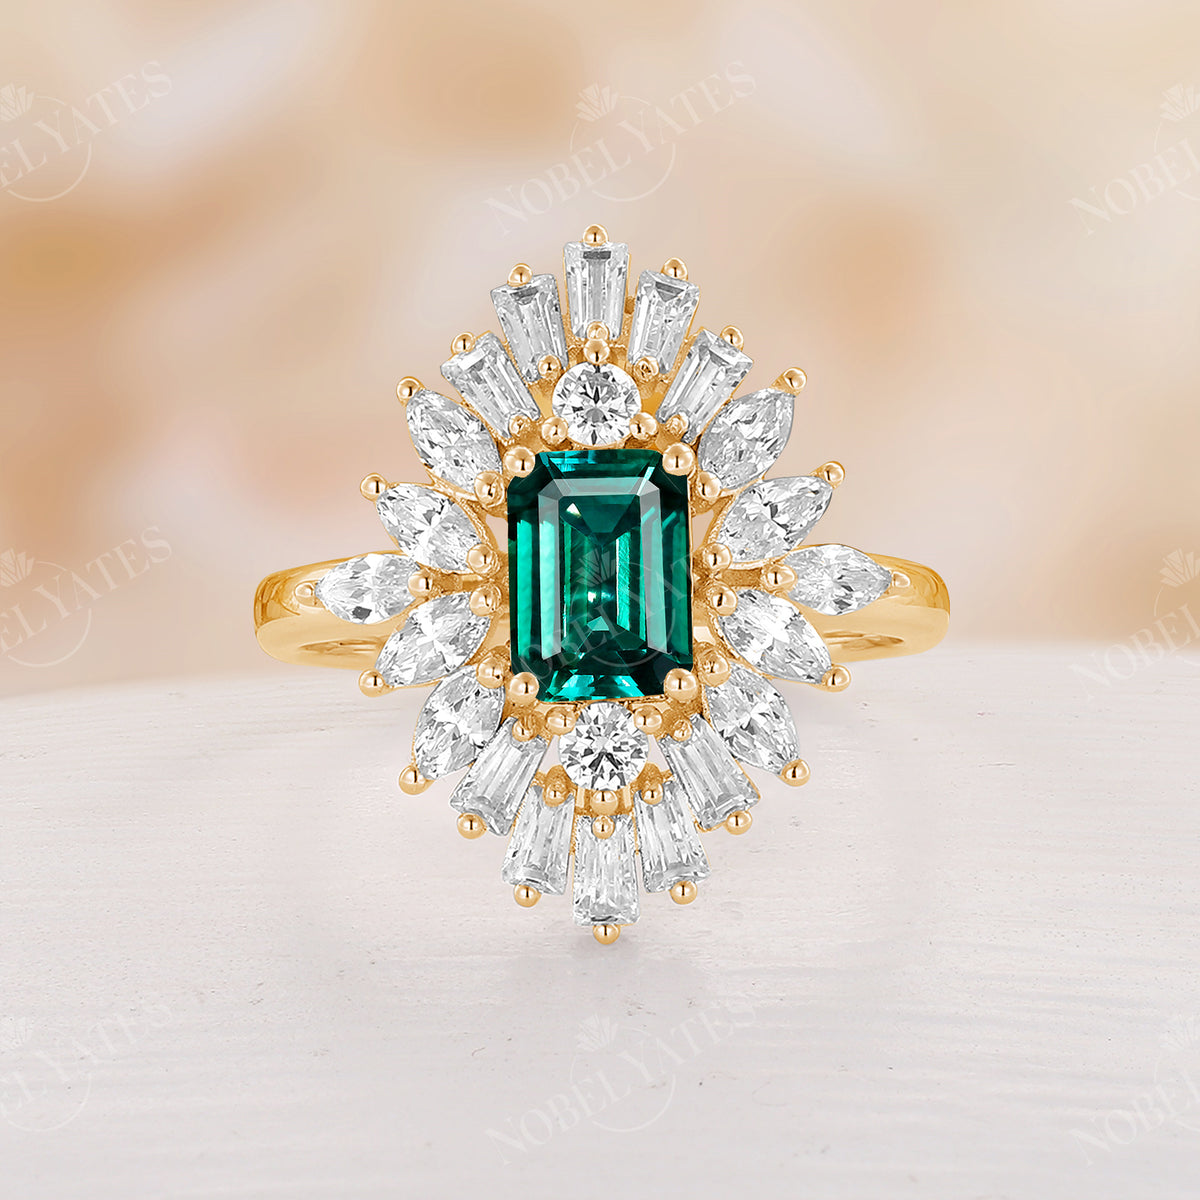 Art Deco Lab Emerald Engagement Ring Baguette Halo Rose Gold